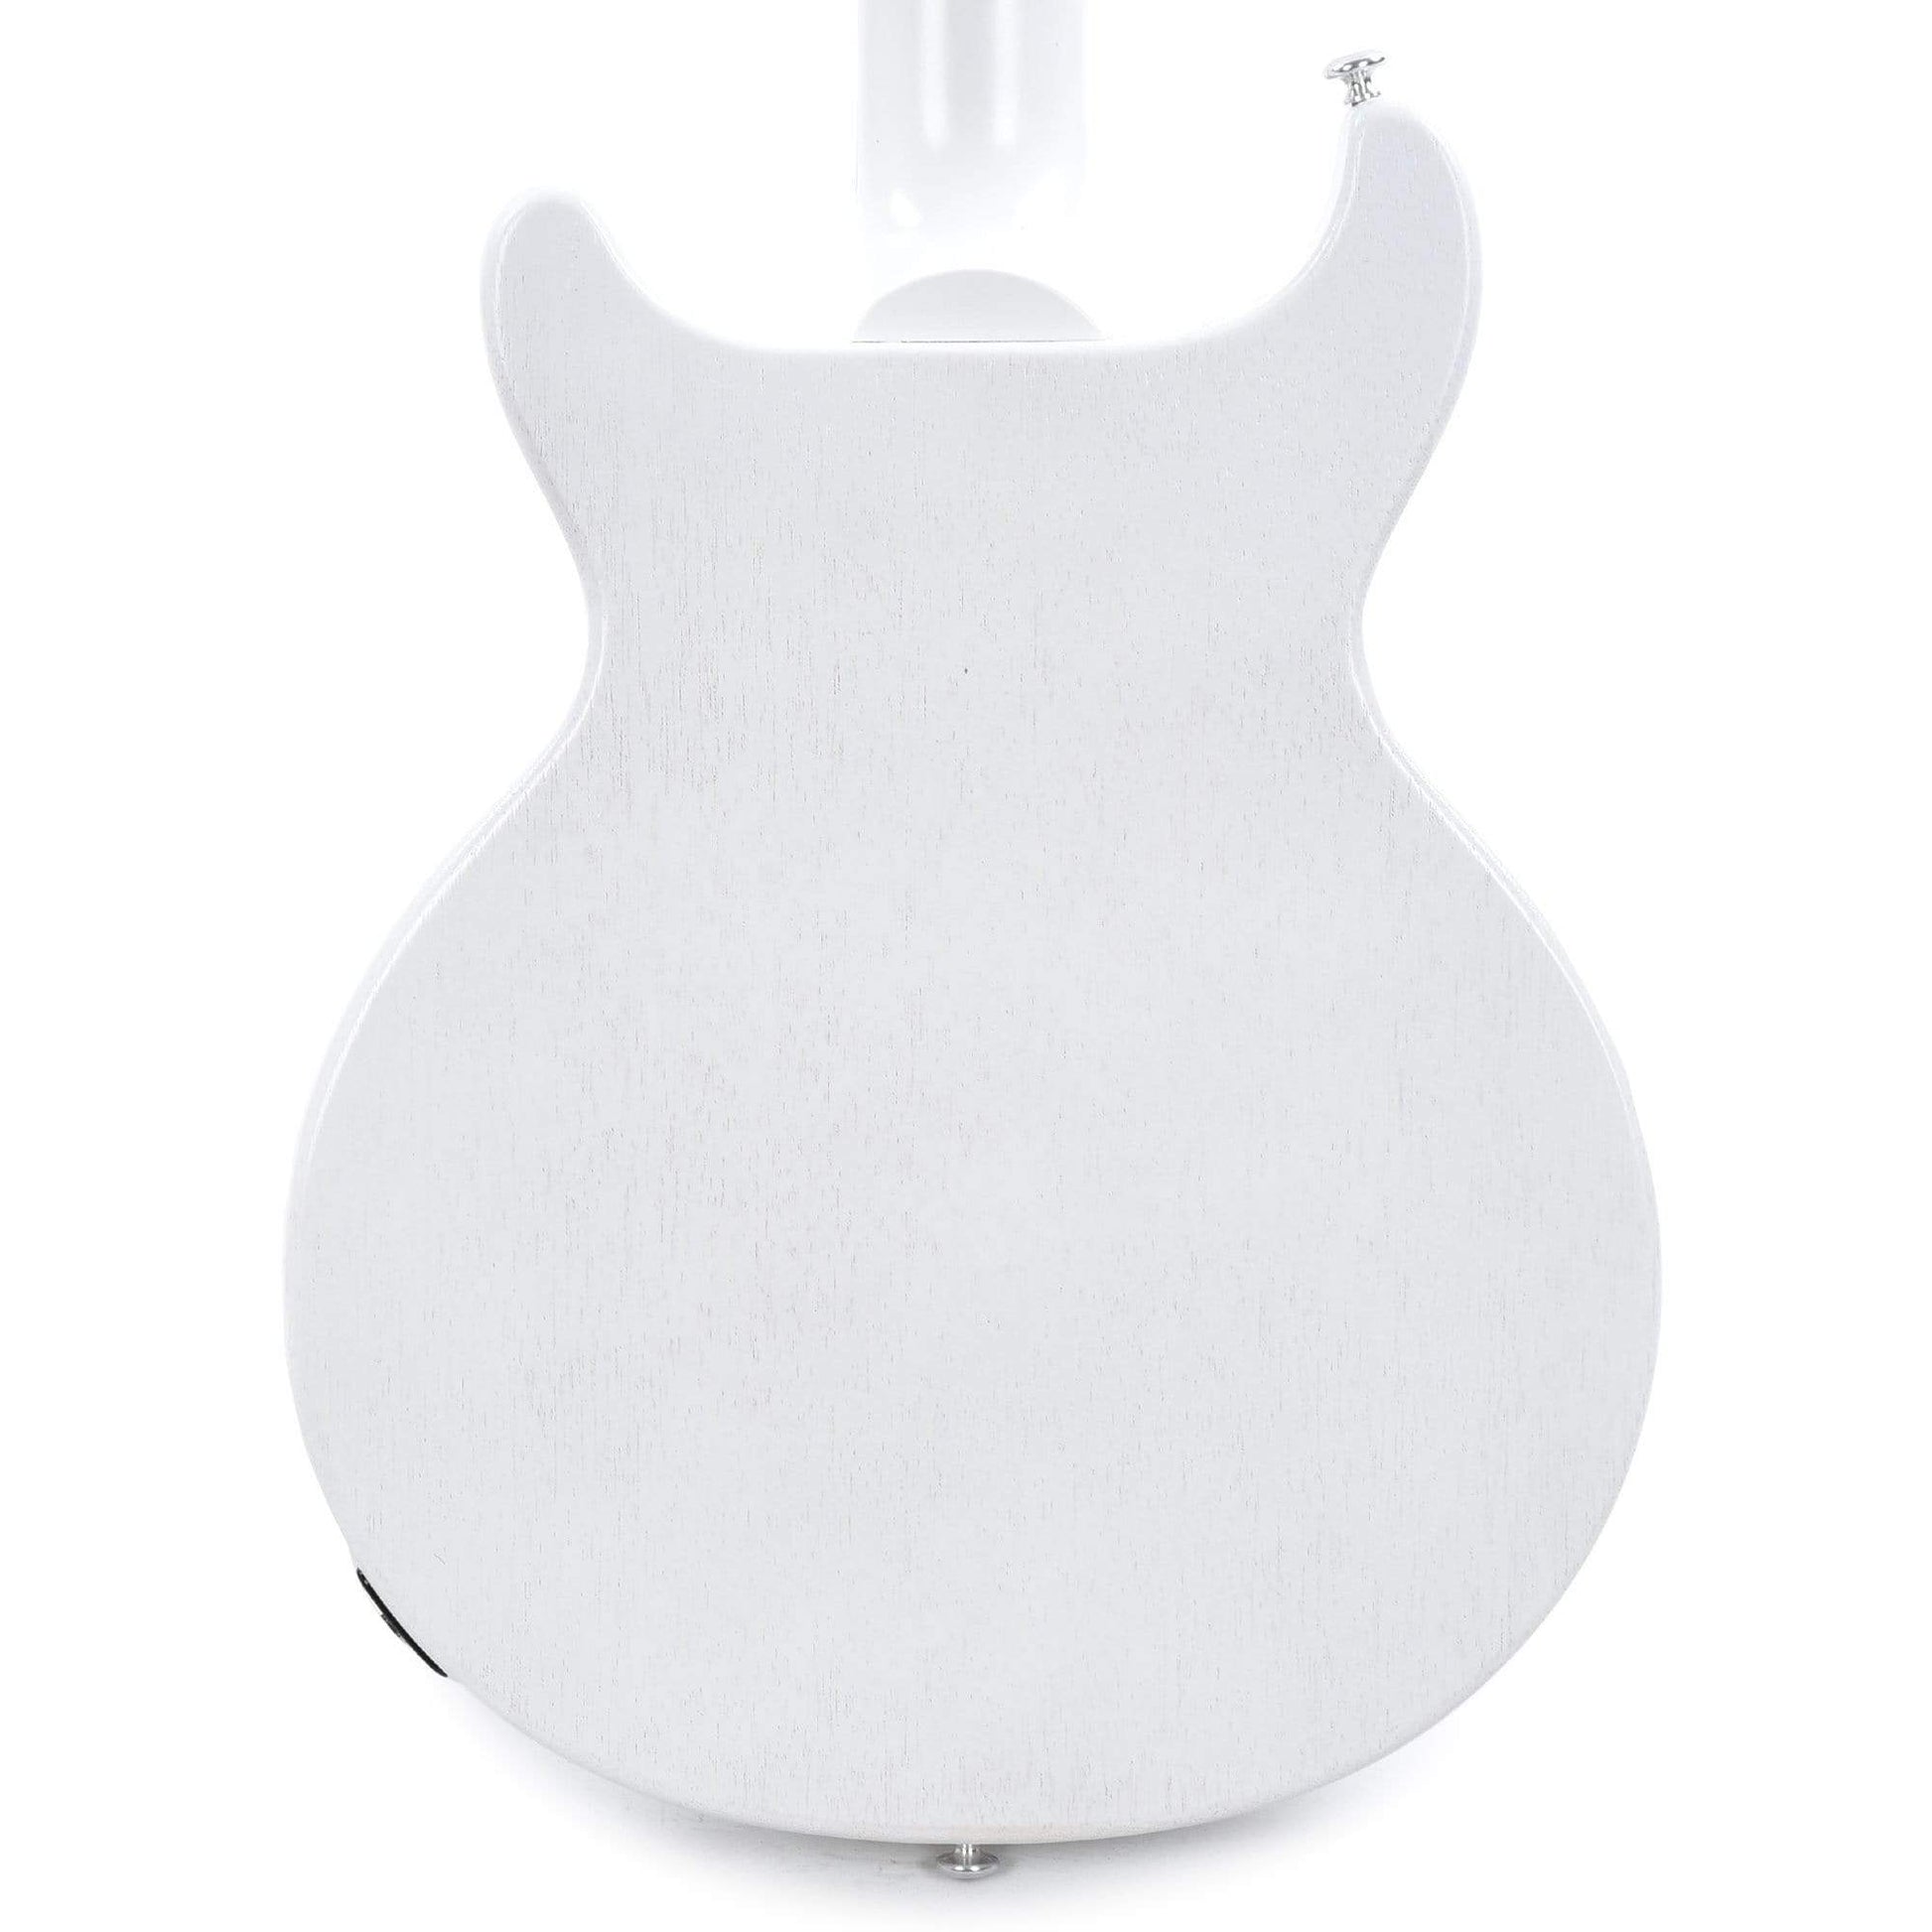 Gibson USA Les Paul Junior DC Bass Worn White w/Tortoise Pickguard & Chrome Cover Bass Guitars / 4-String